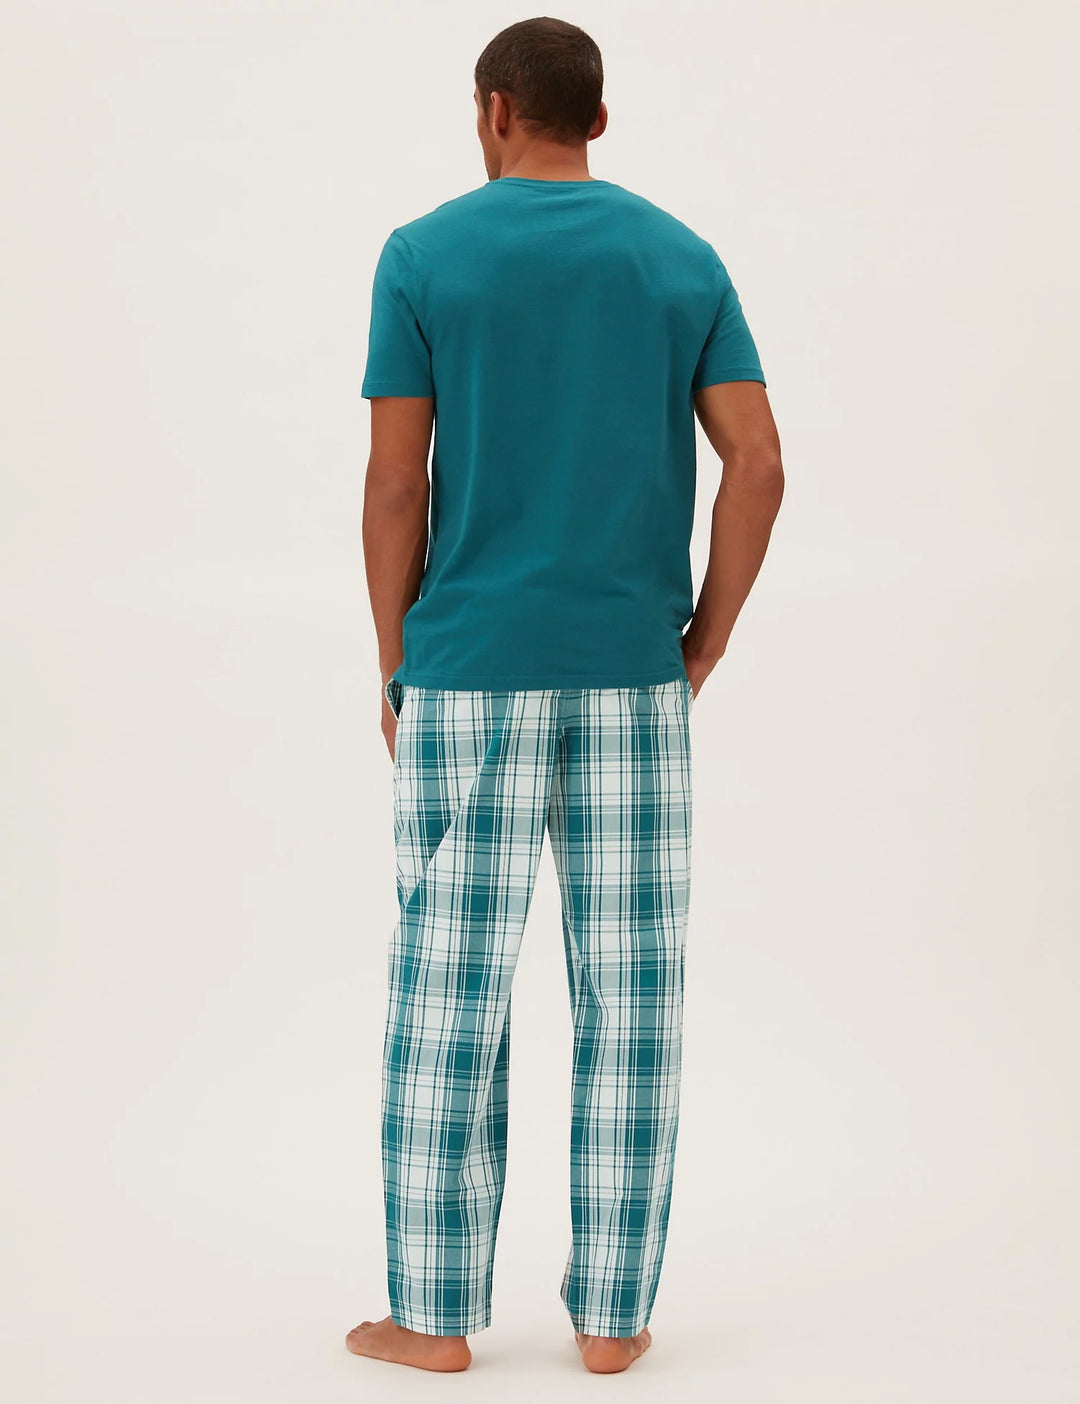 M&S Mens Woven Cotton Pajama & S/S T-Shirt T07/3175